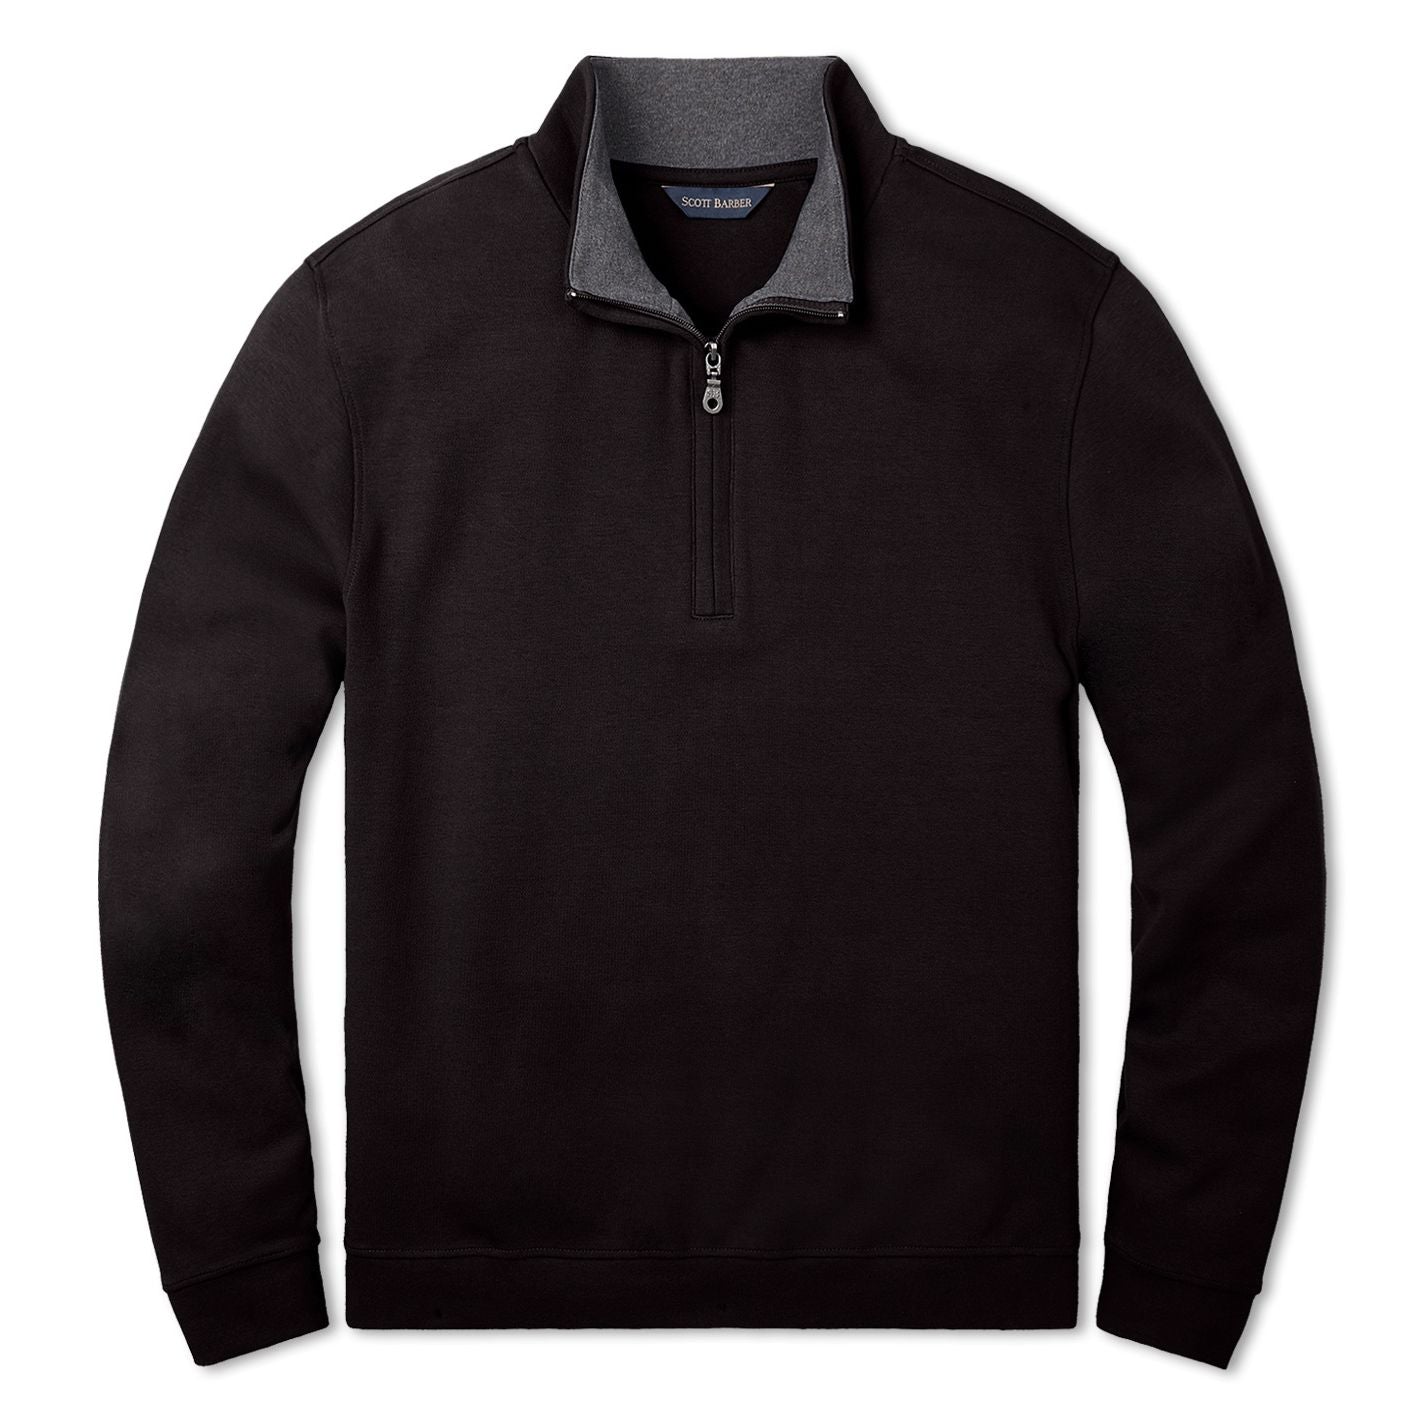 Pima Cotton Zip-Mock Sweatshirt in Black by Scott Barber